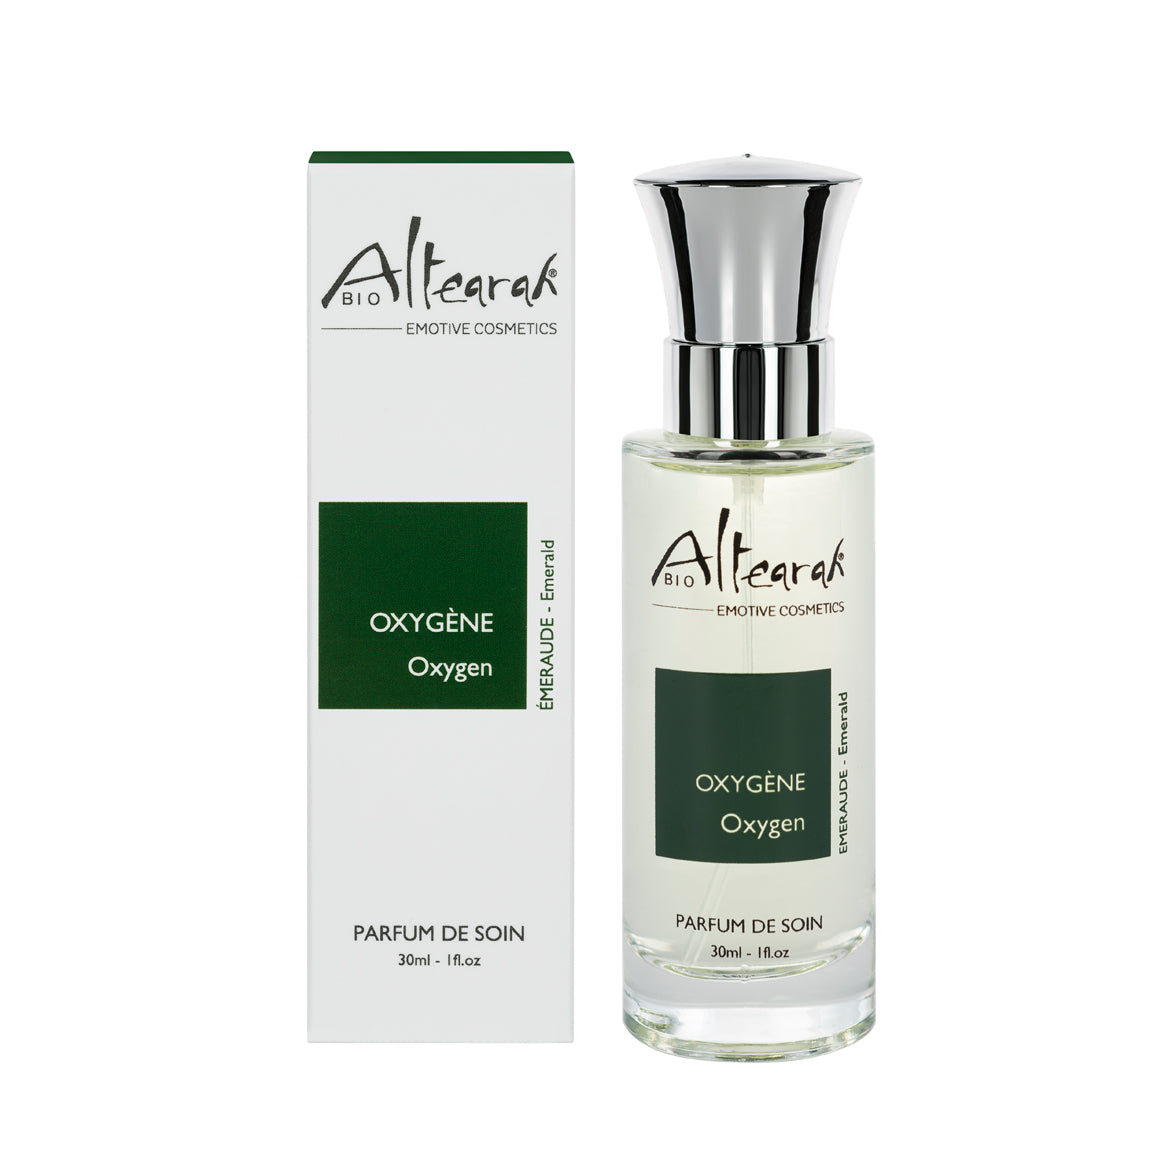 Altearah Emerald Perfume: Oxygen - XL